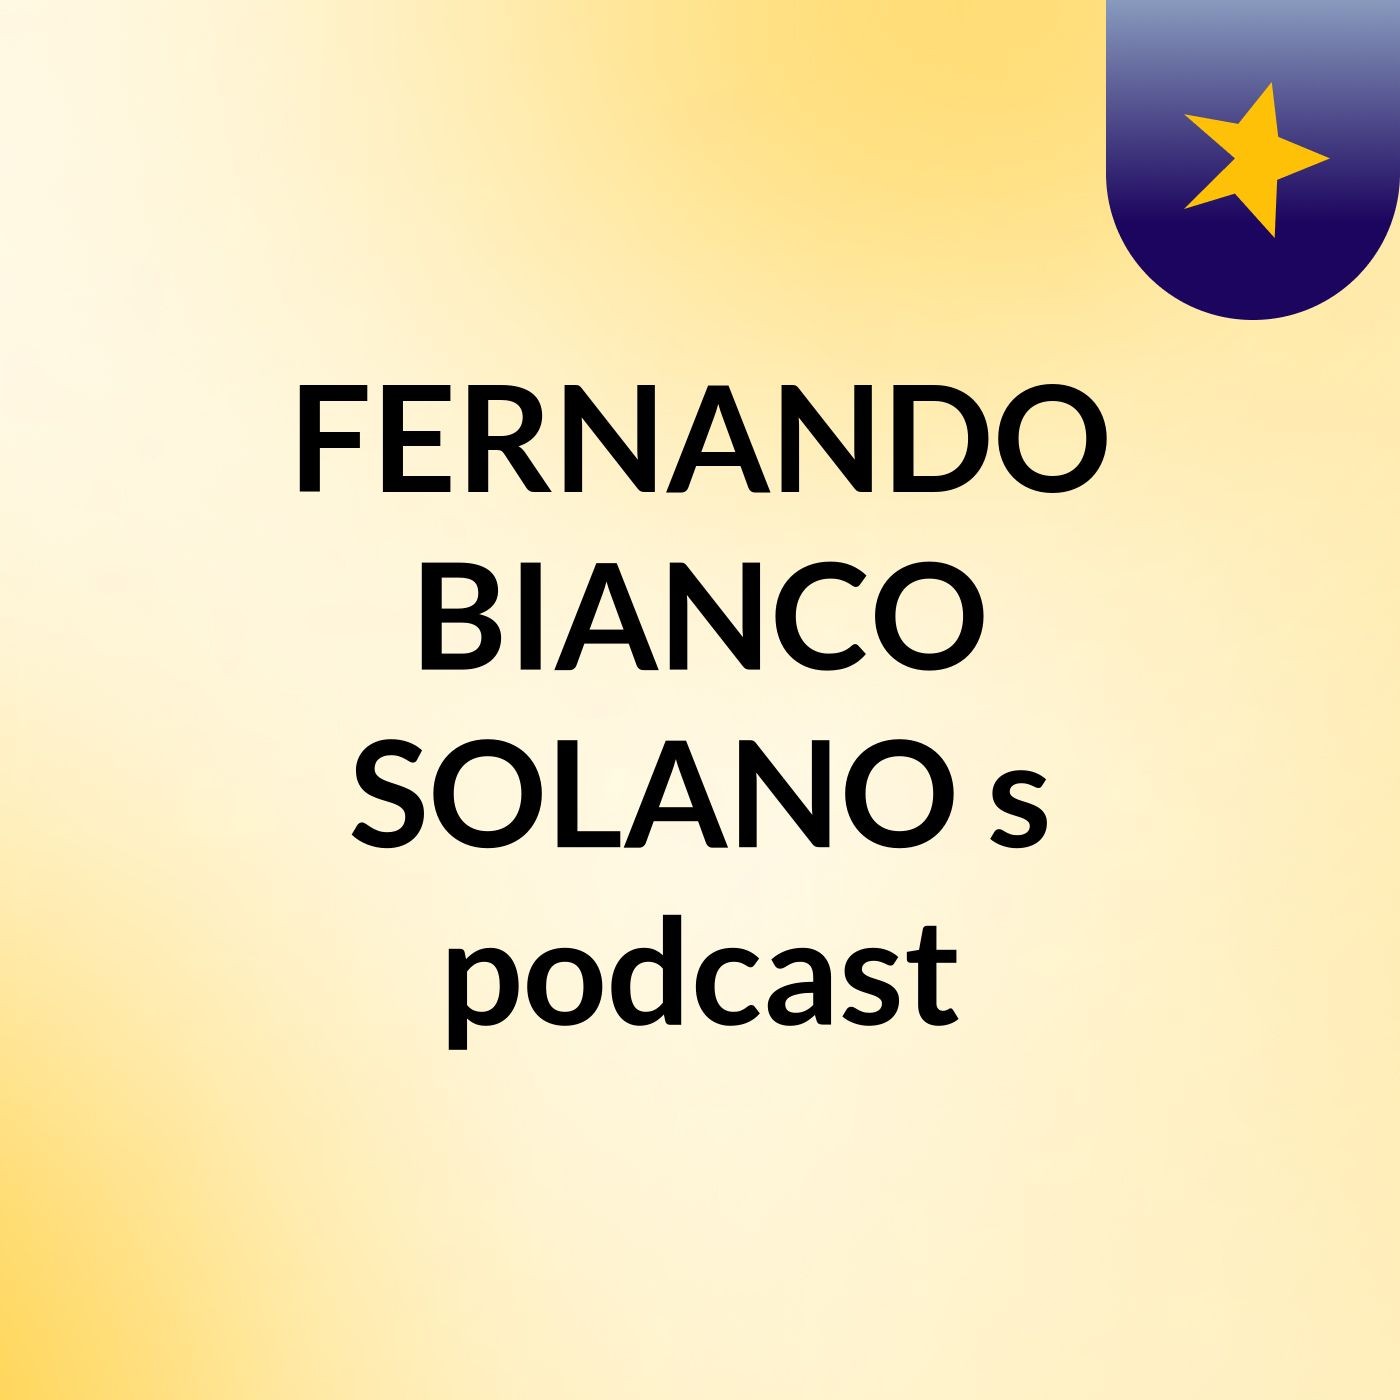 FERNANDO BIANCO SOLANO's podcast